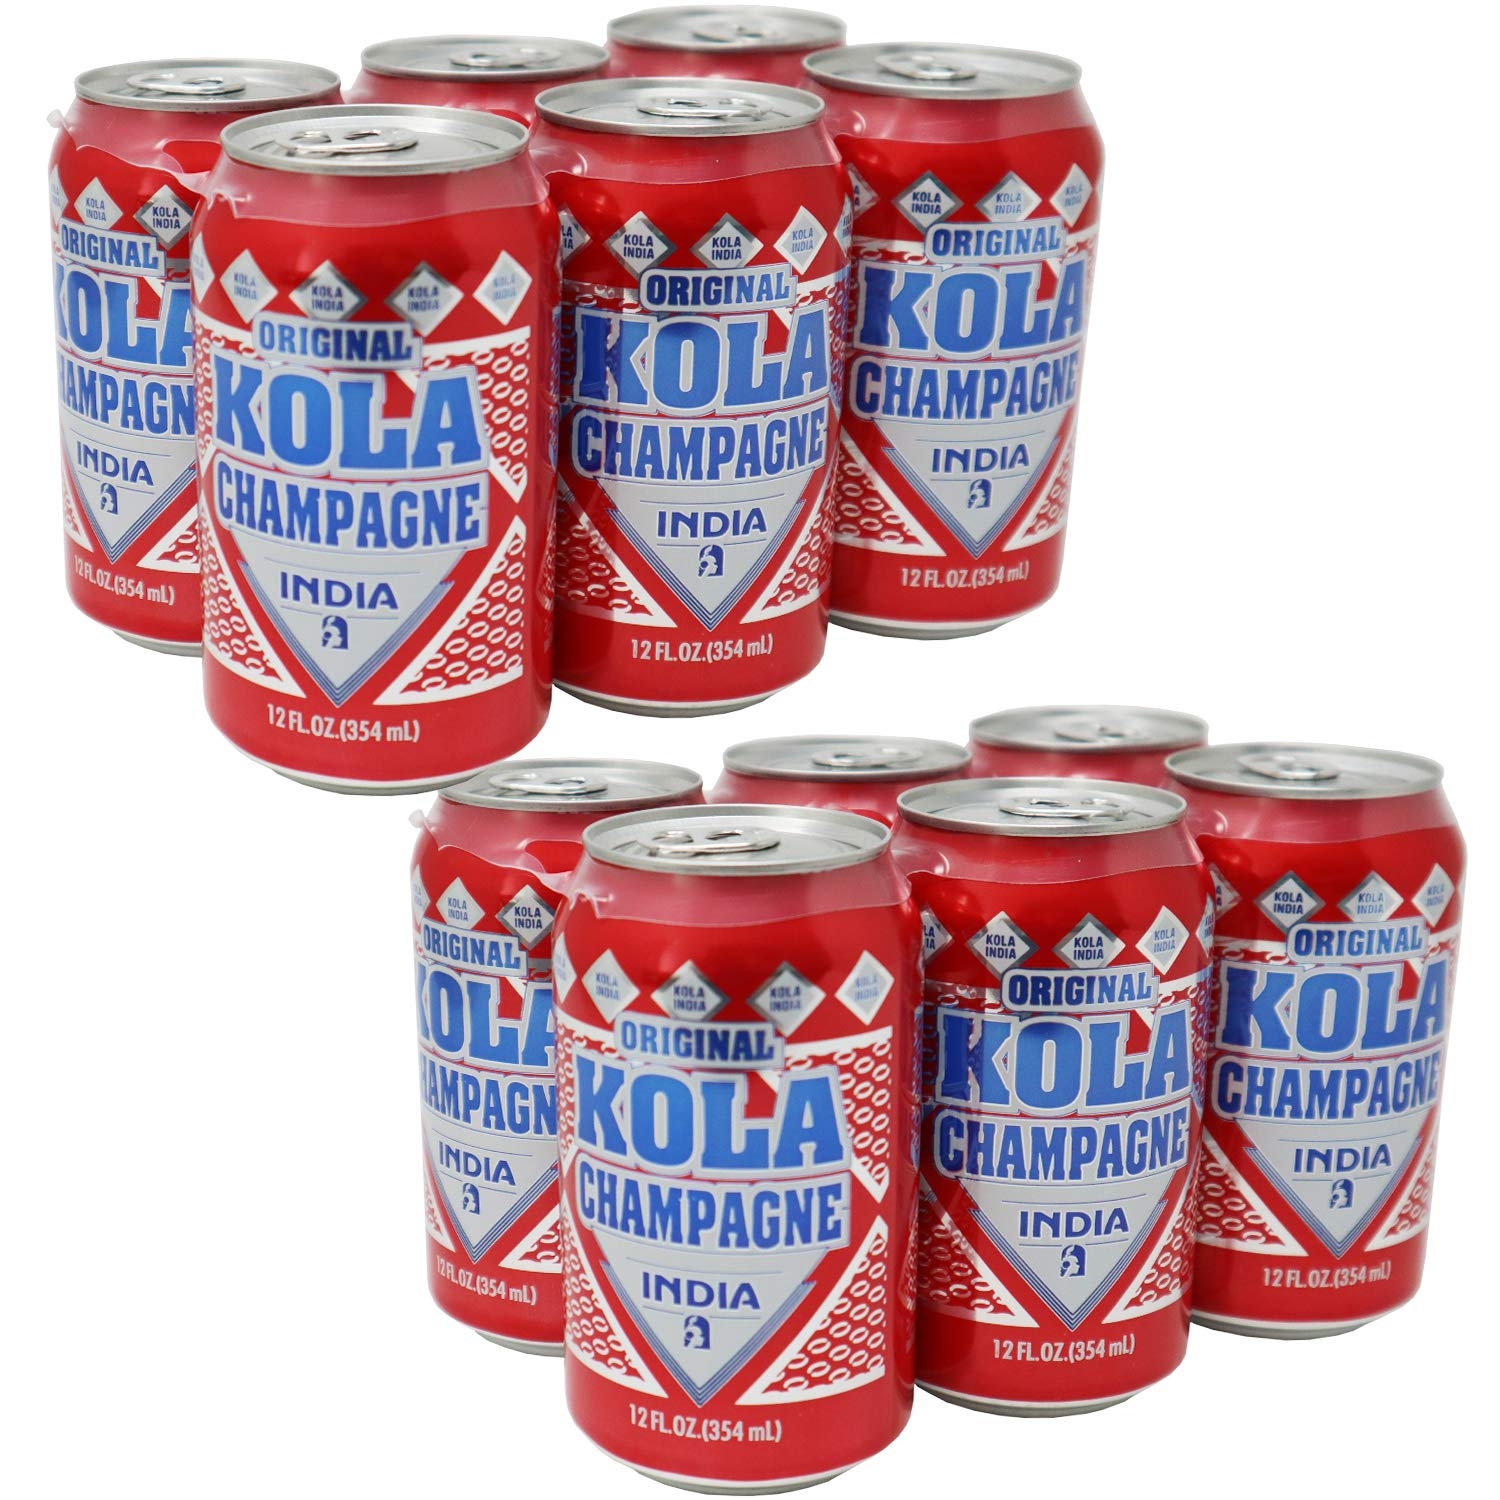 India Kola Champagne – Puerto Rico’s Original Kola – 12 fl oz (Count of 2))   price checker   price checker Description